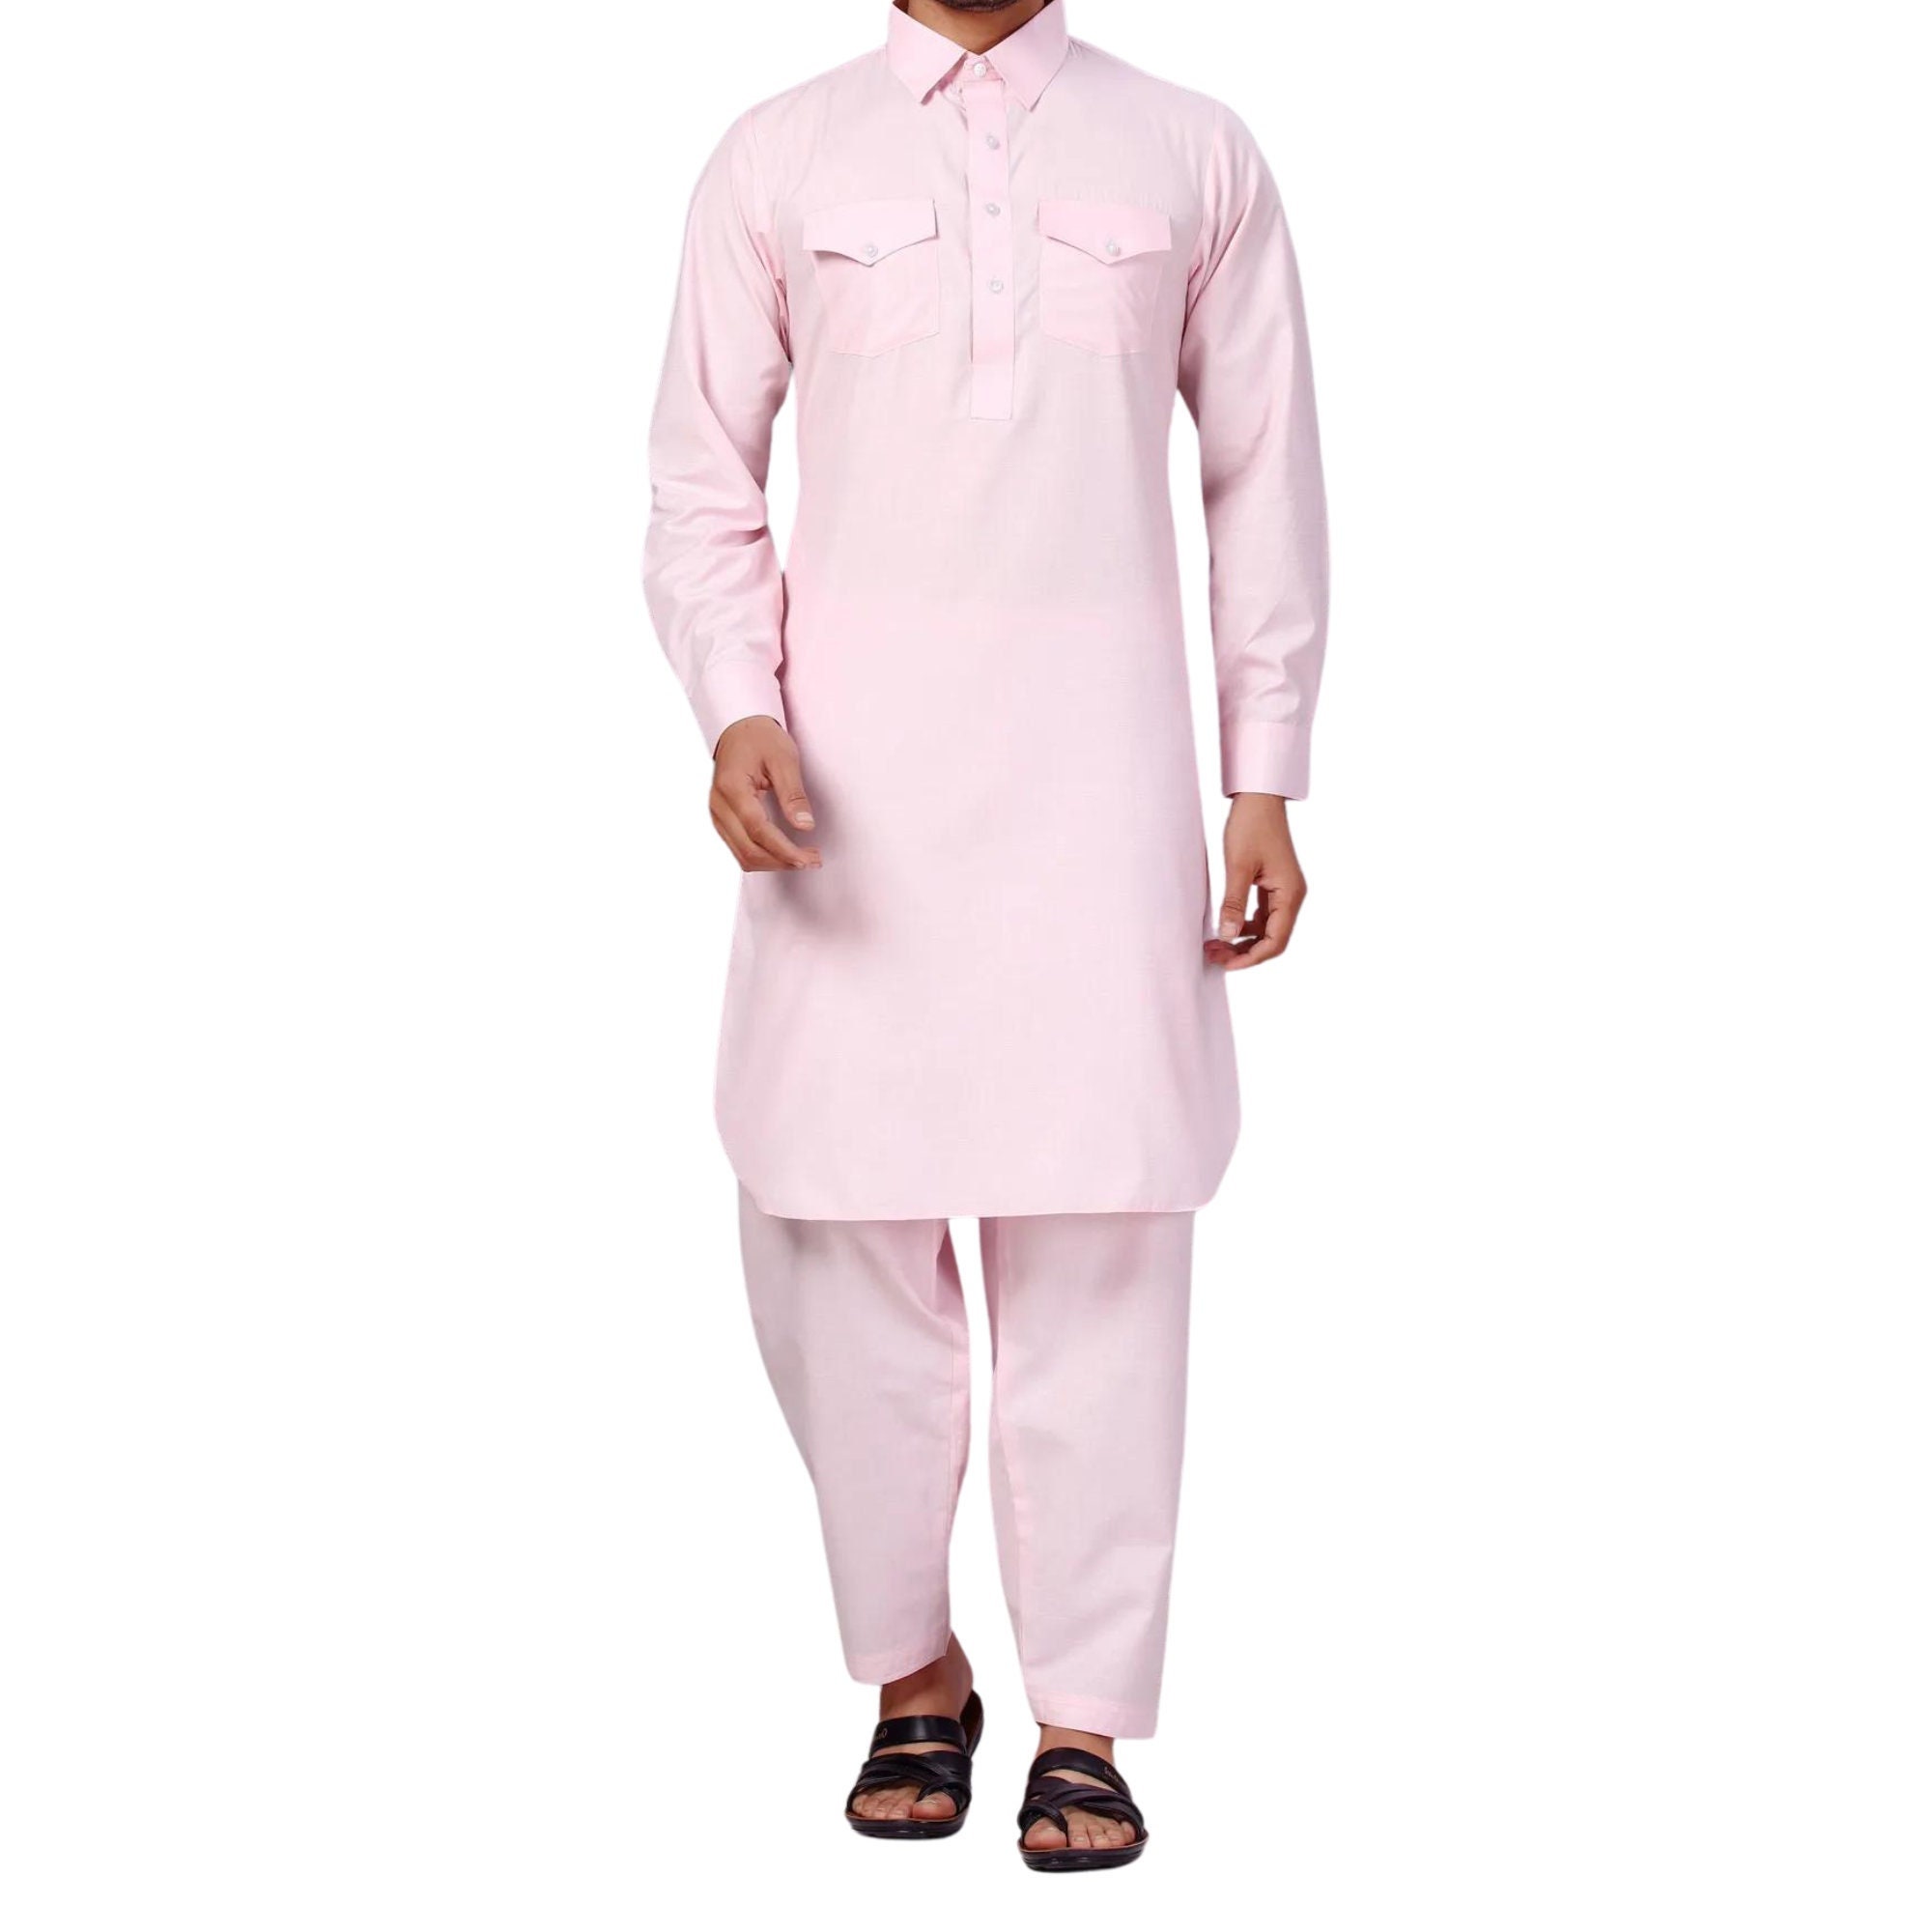 Handmade Ethnic Wear Pathani Suit Latest Design Kurta Pajama